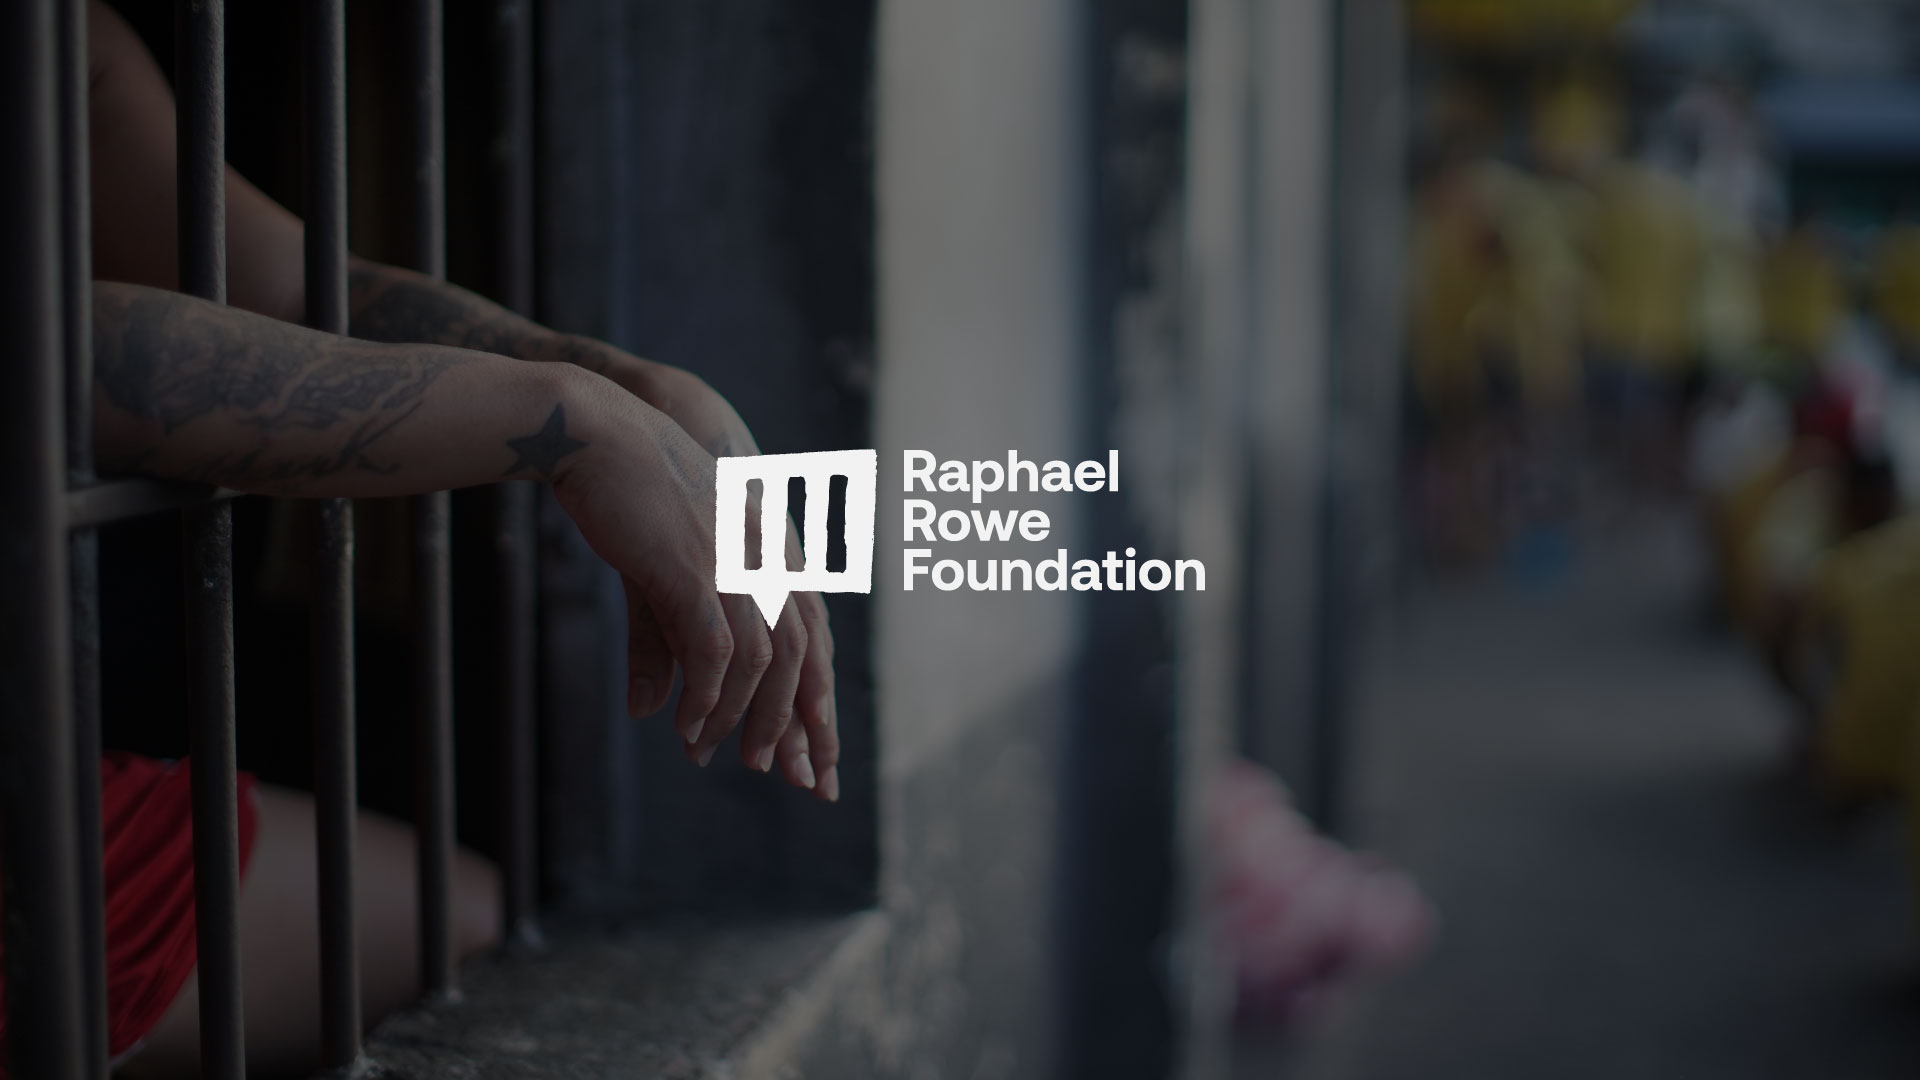 OCD Studio Creates Brand and Visual Communication for Raphael Rowe Foundation